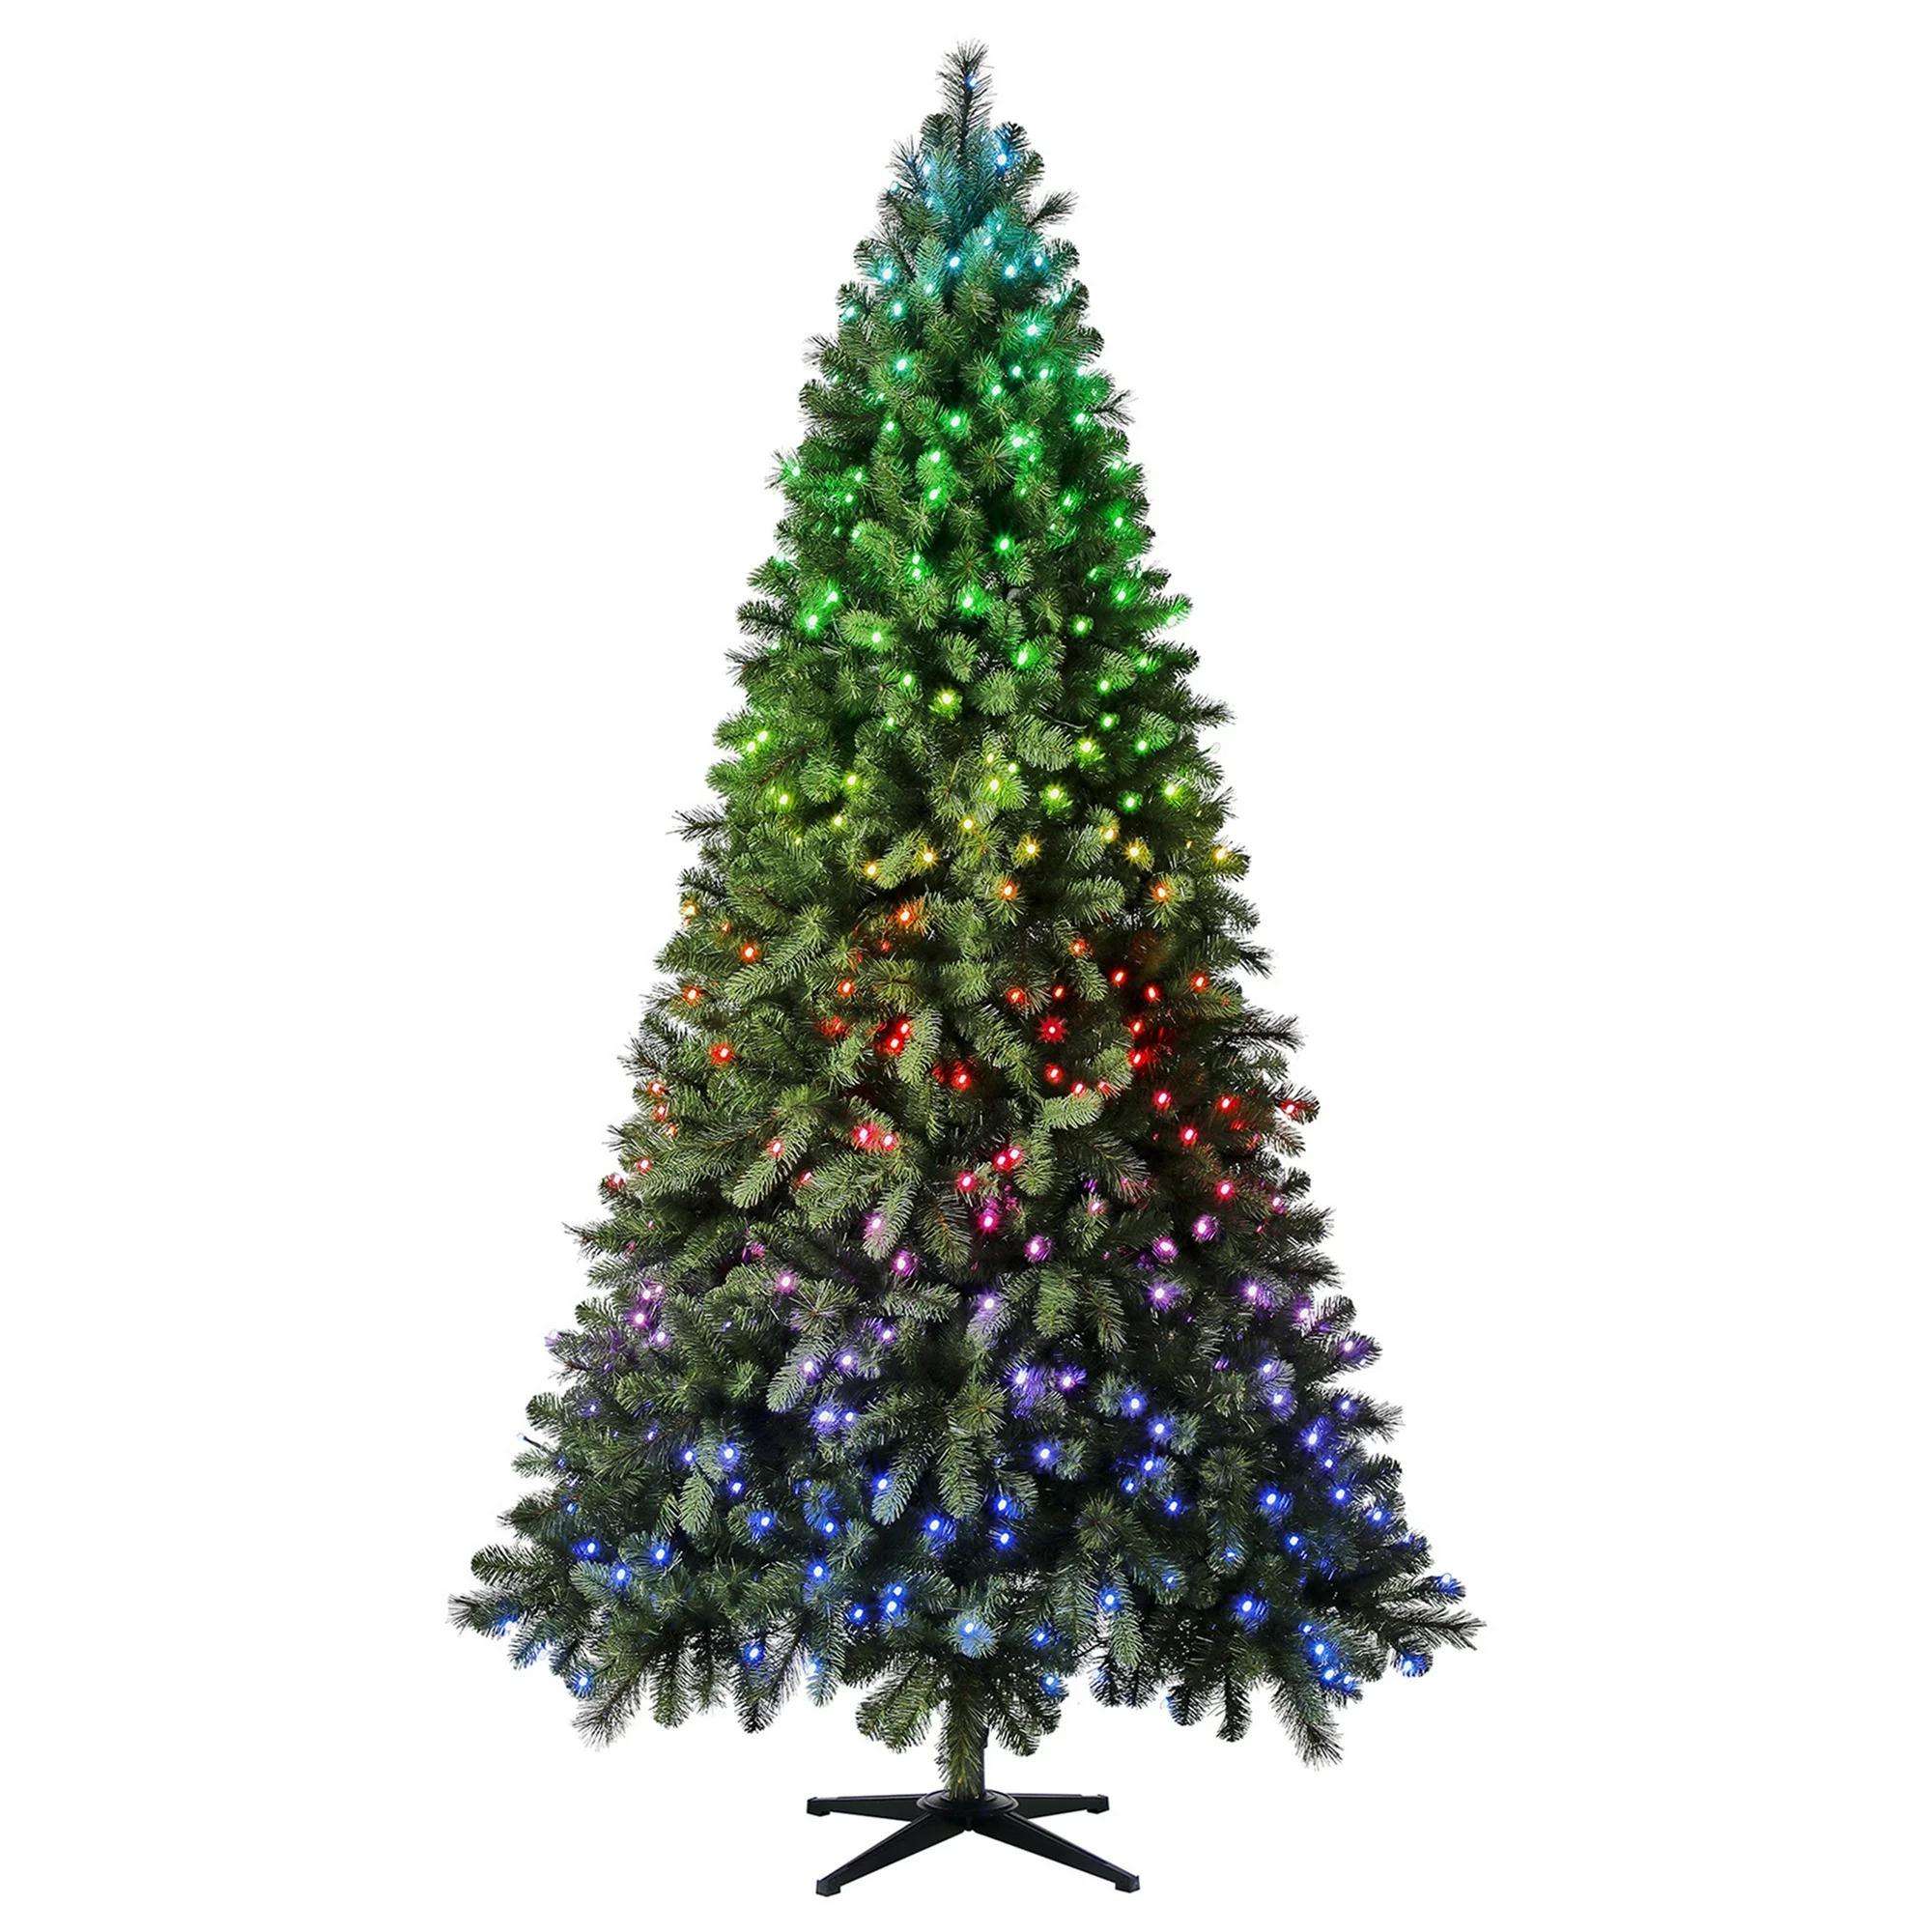 7.5ft Evergreen Pre-Lit Twinkly Carolina Spruce Christmas Tree $194 Shipped